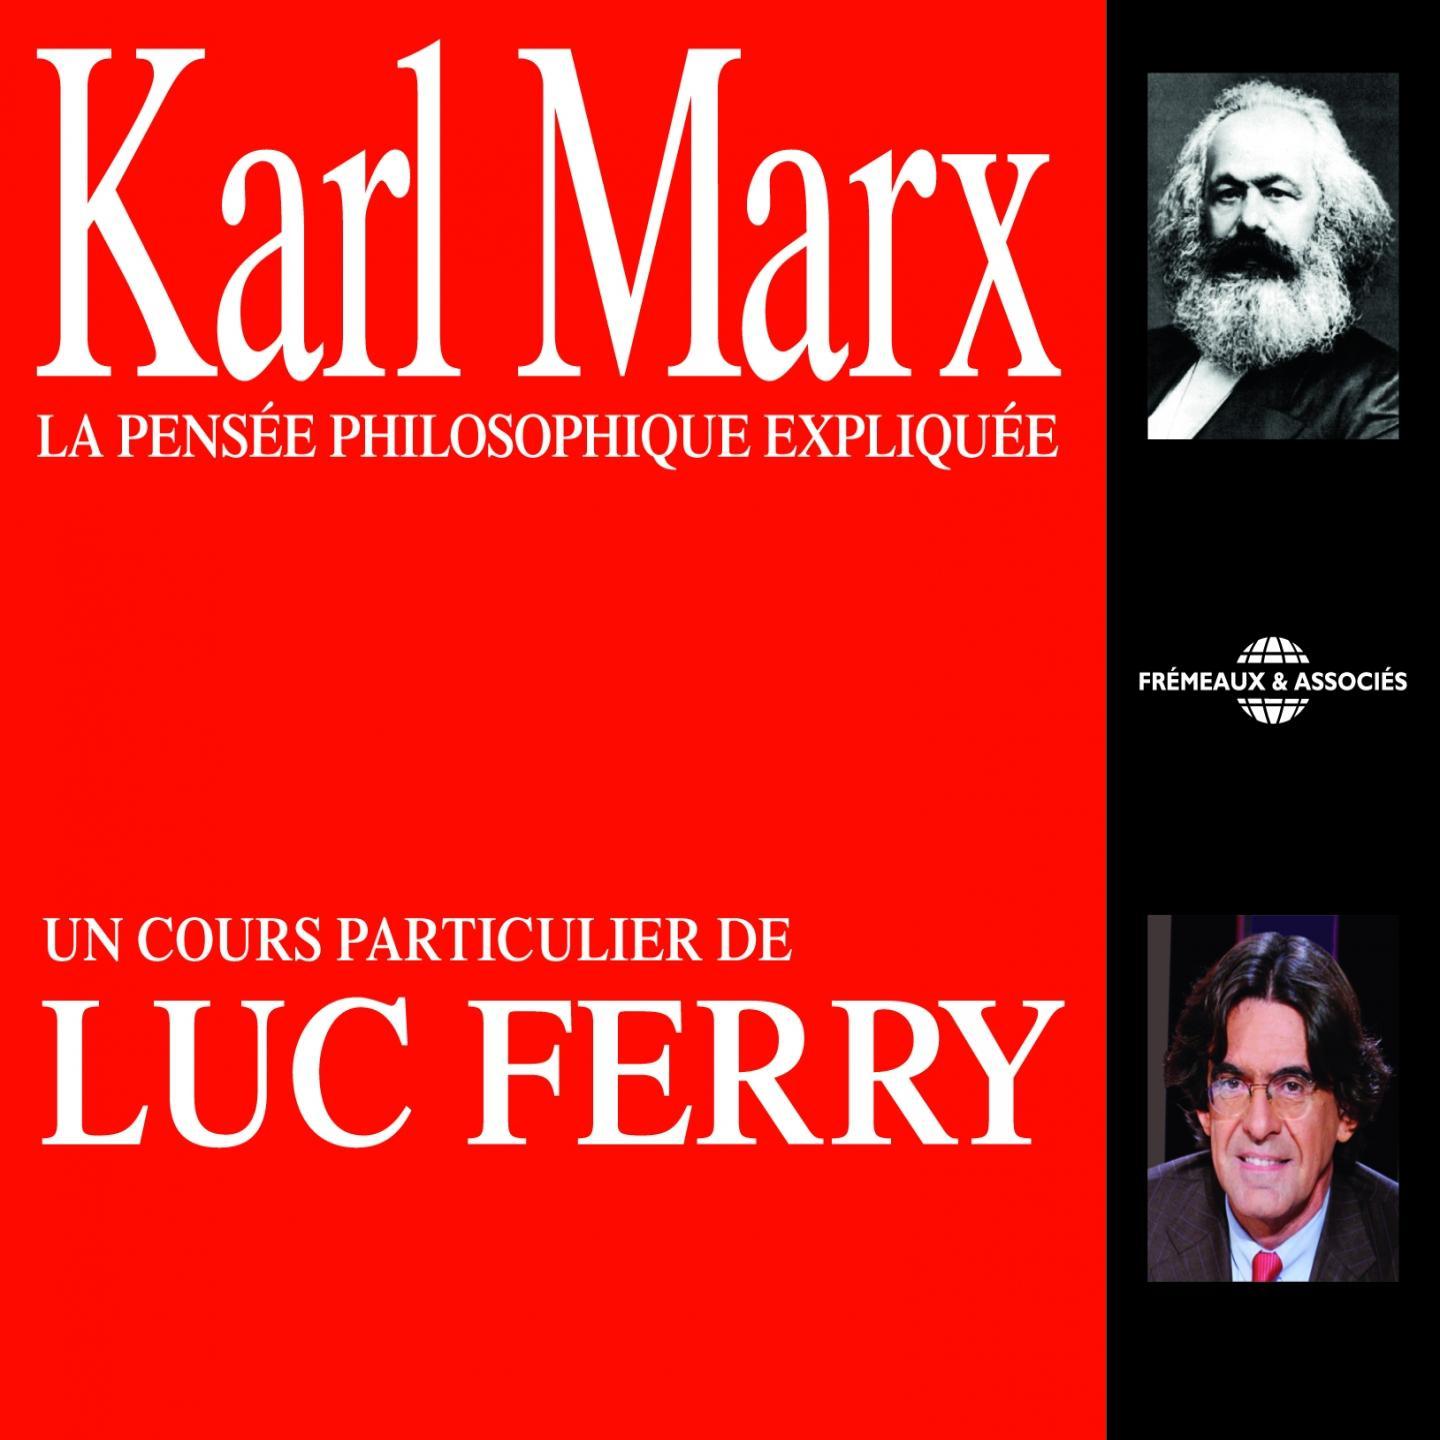 Karl Marx - Introduction